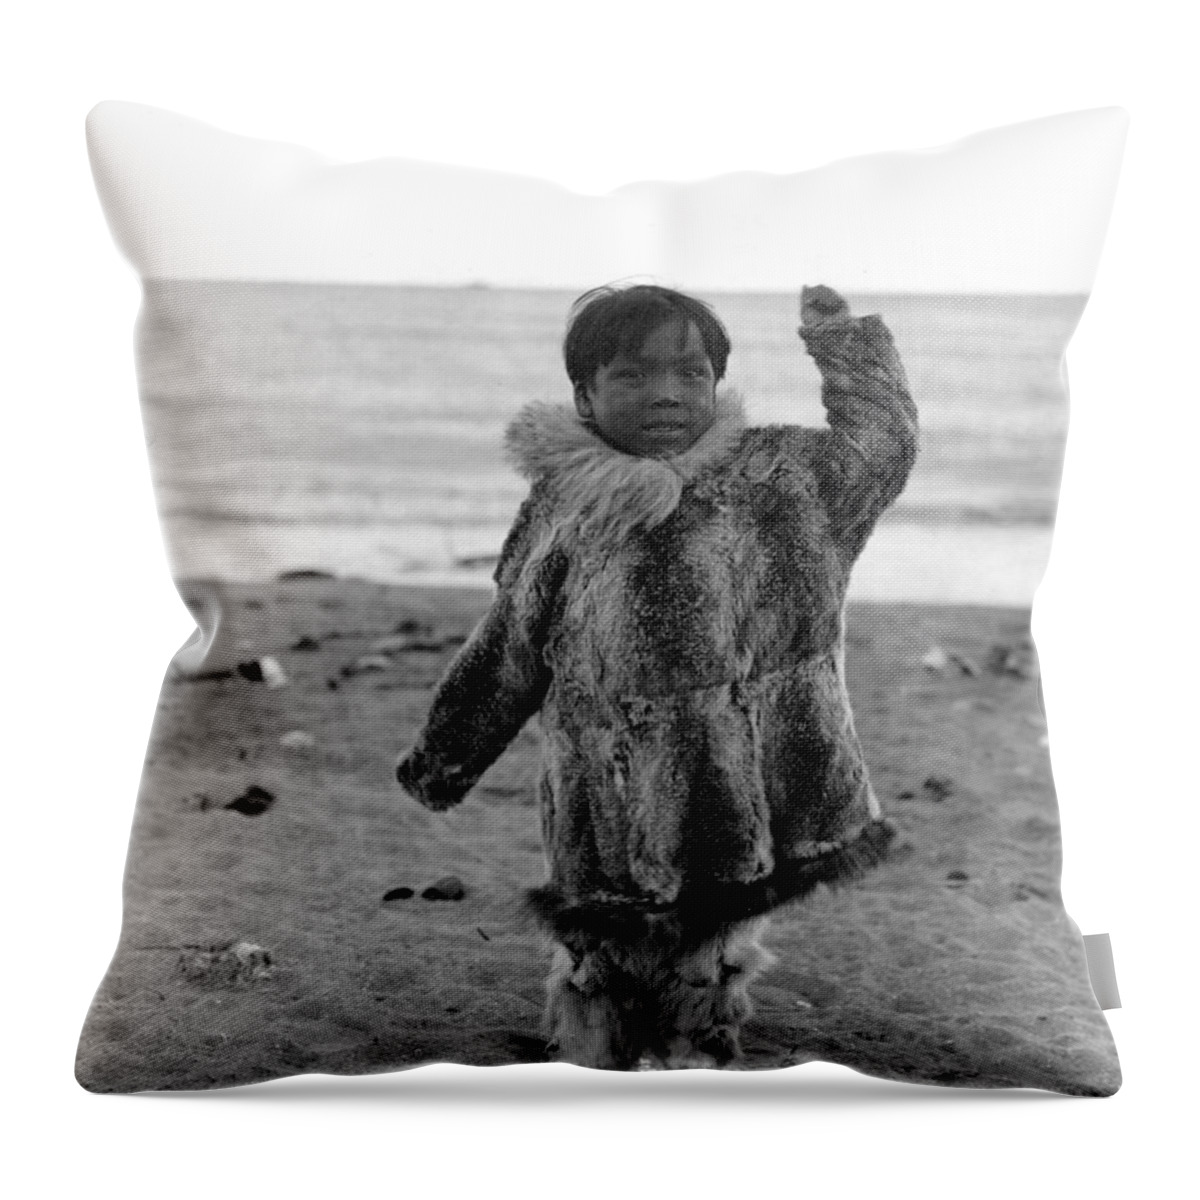 1906 Throw Pillow featuring the photograph Alaska Eskimo Child by Granger